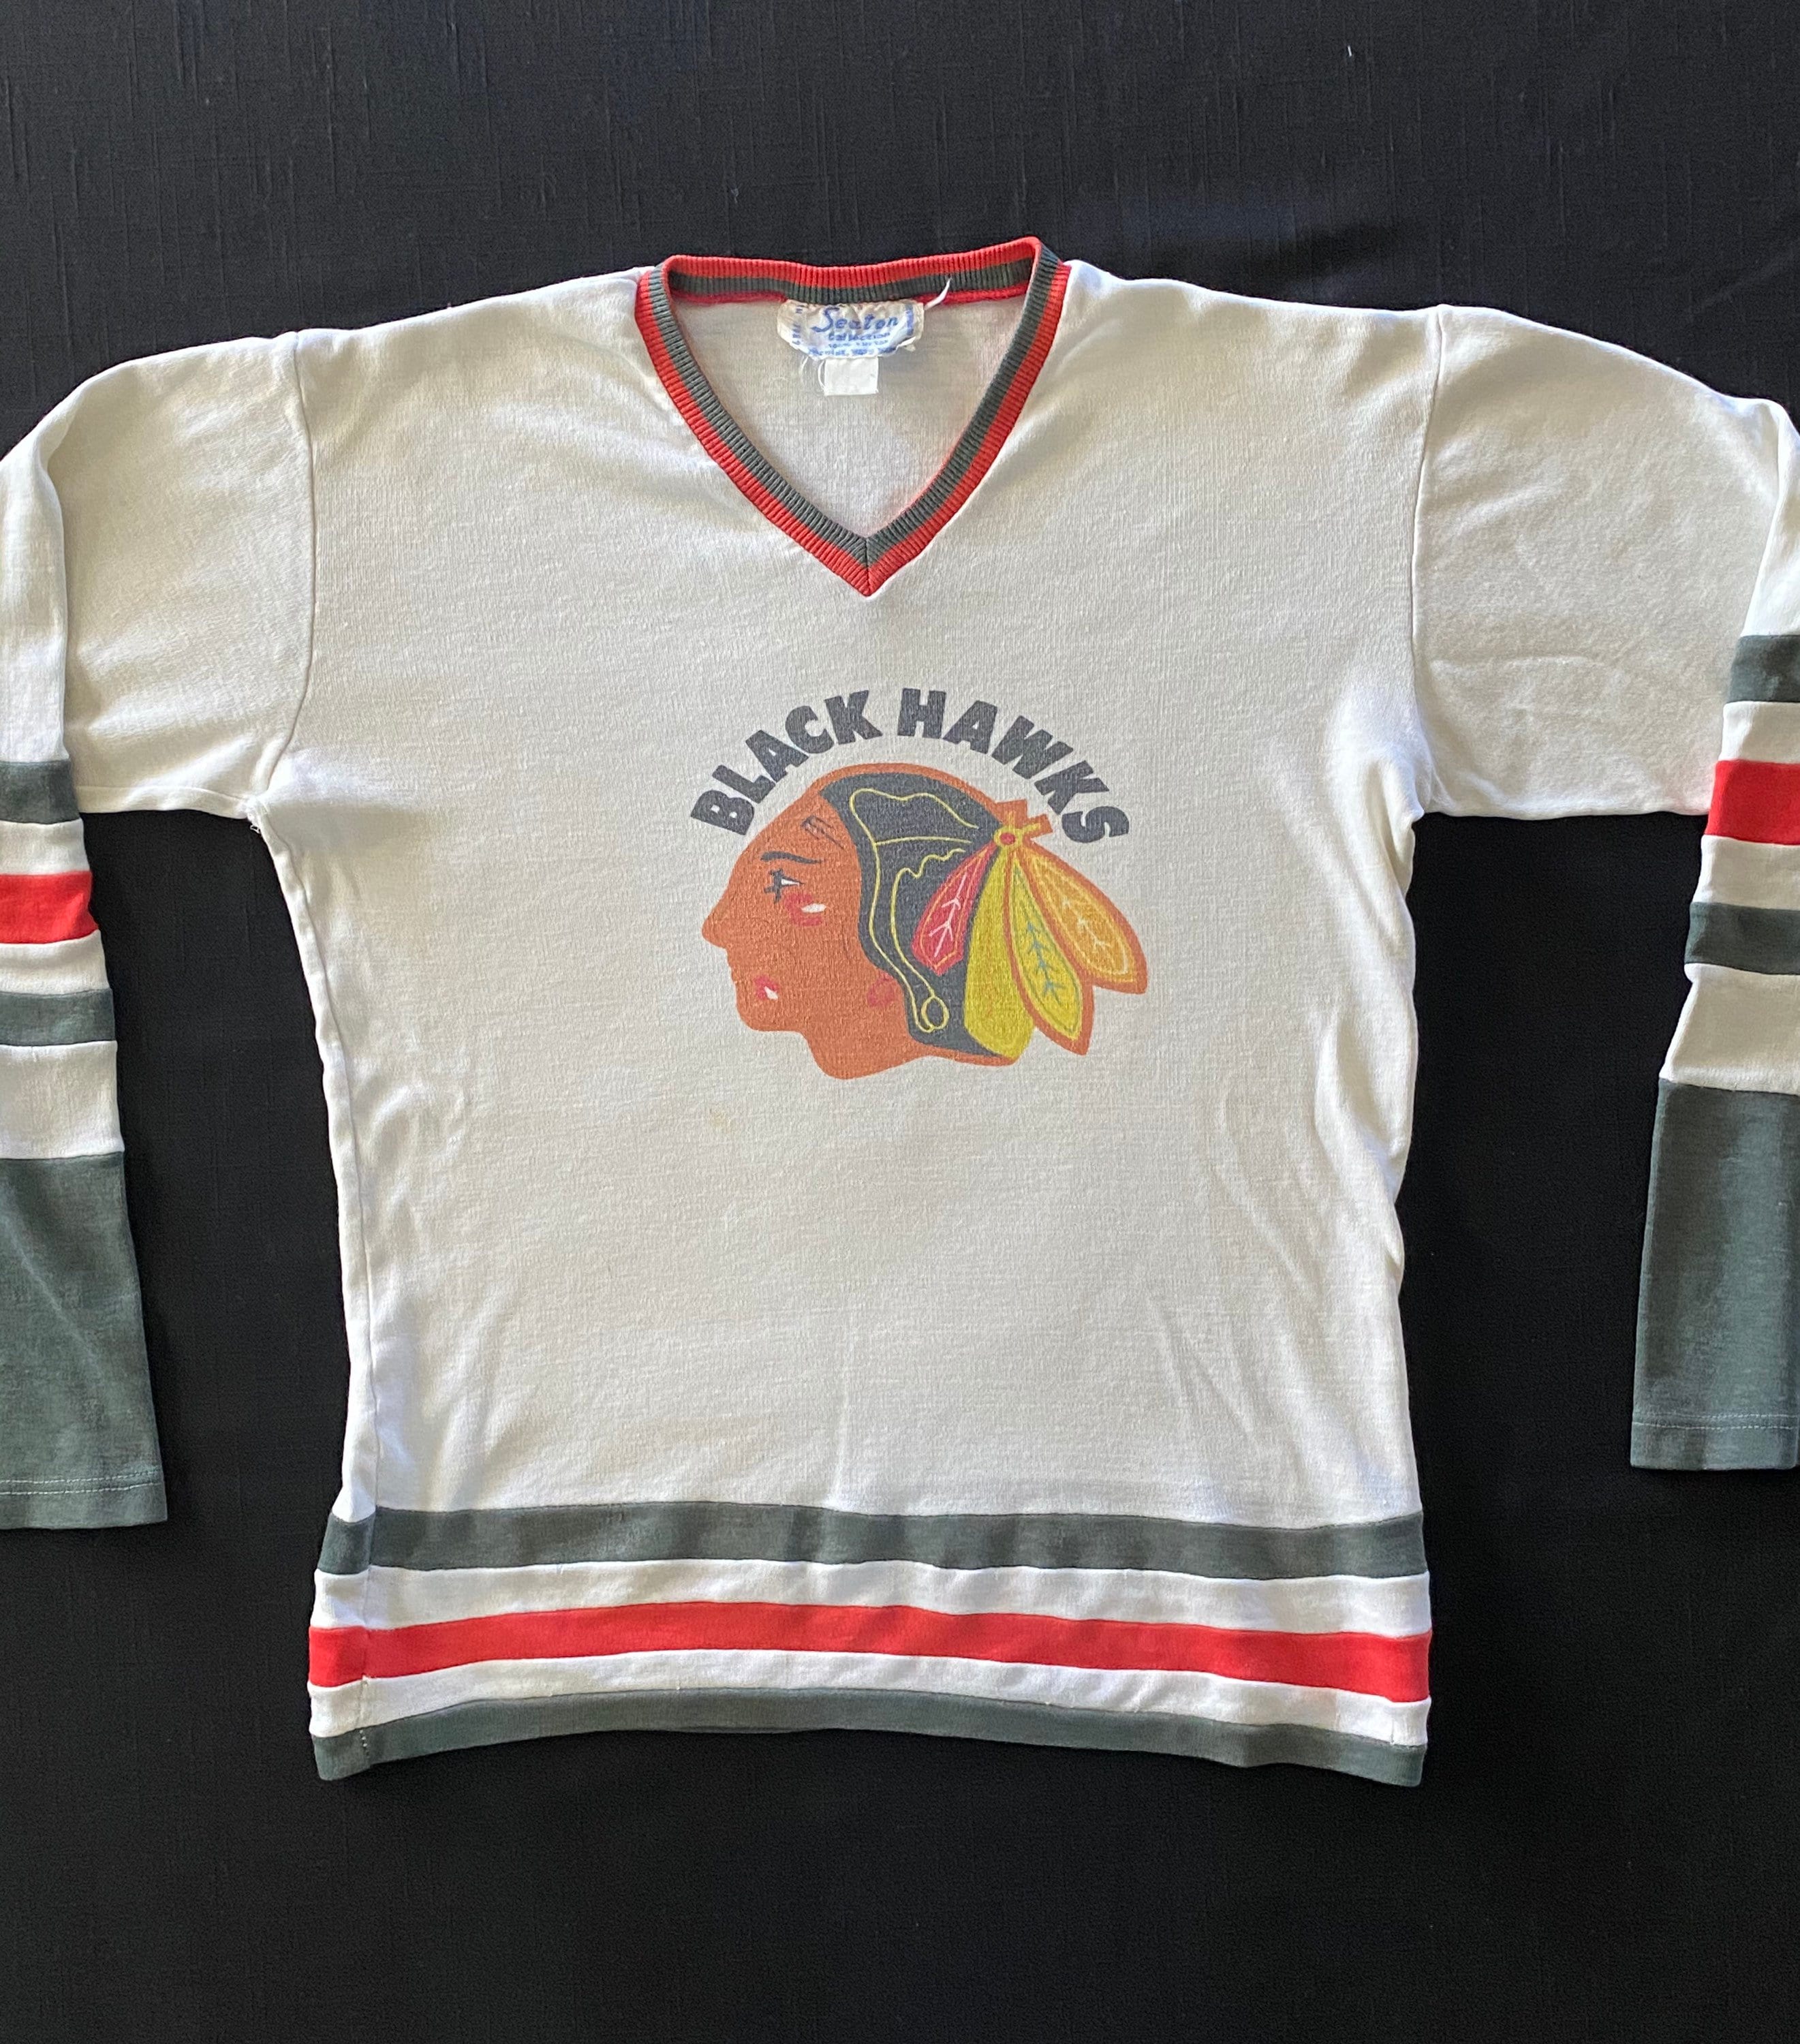 Chicago Blackhawks Sweatshirts in Chicago Blackhawks Team Shop